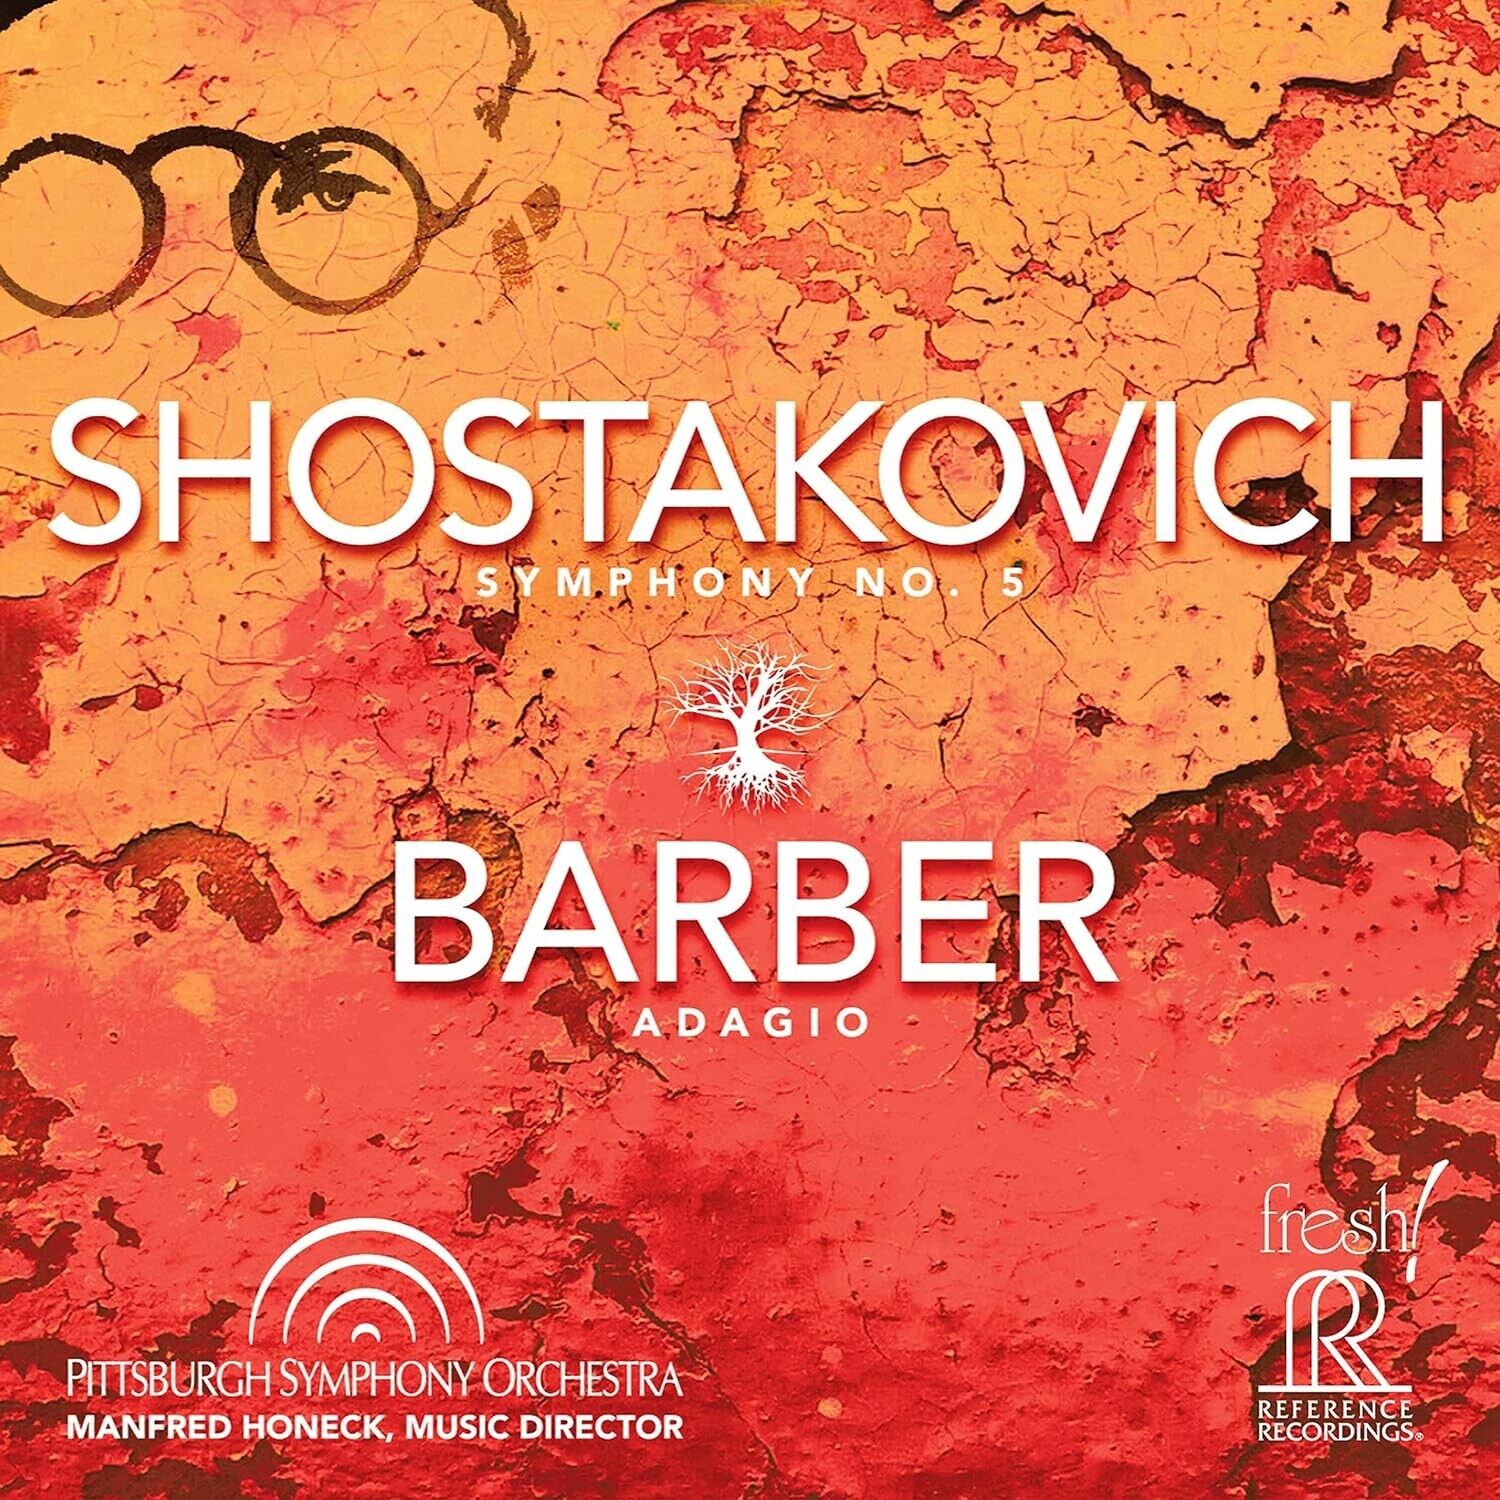 Shostakovich Symphony no.5 etc. - Honeck - Reference Recordings hybrid SACD